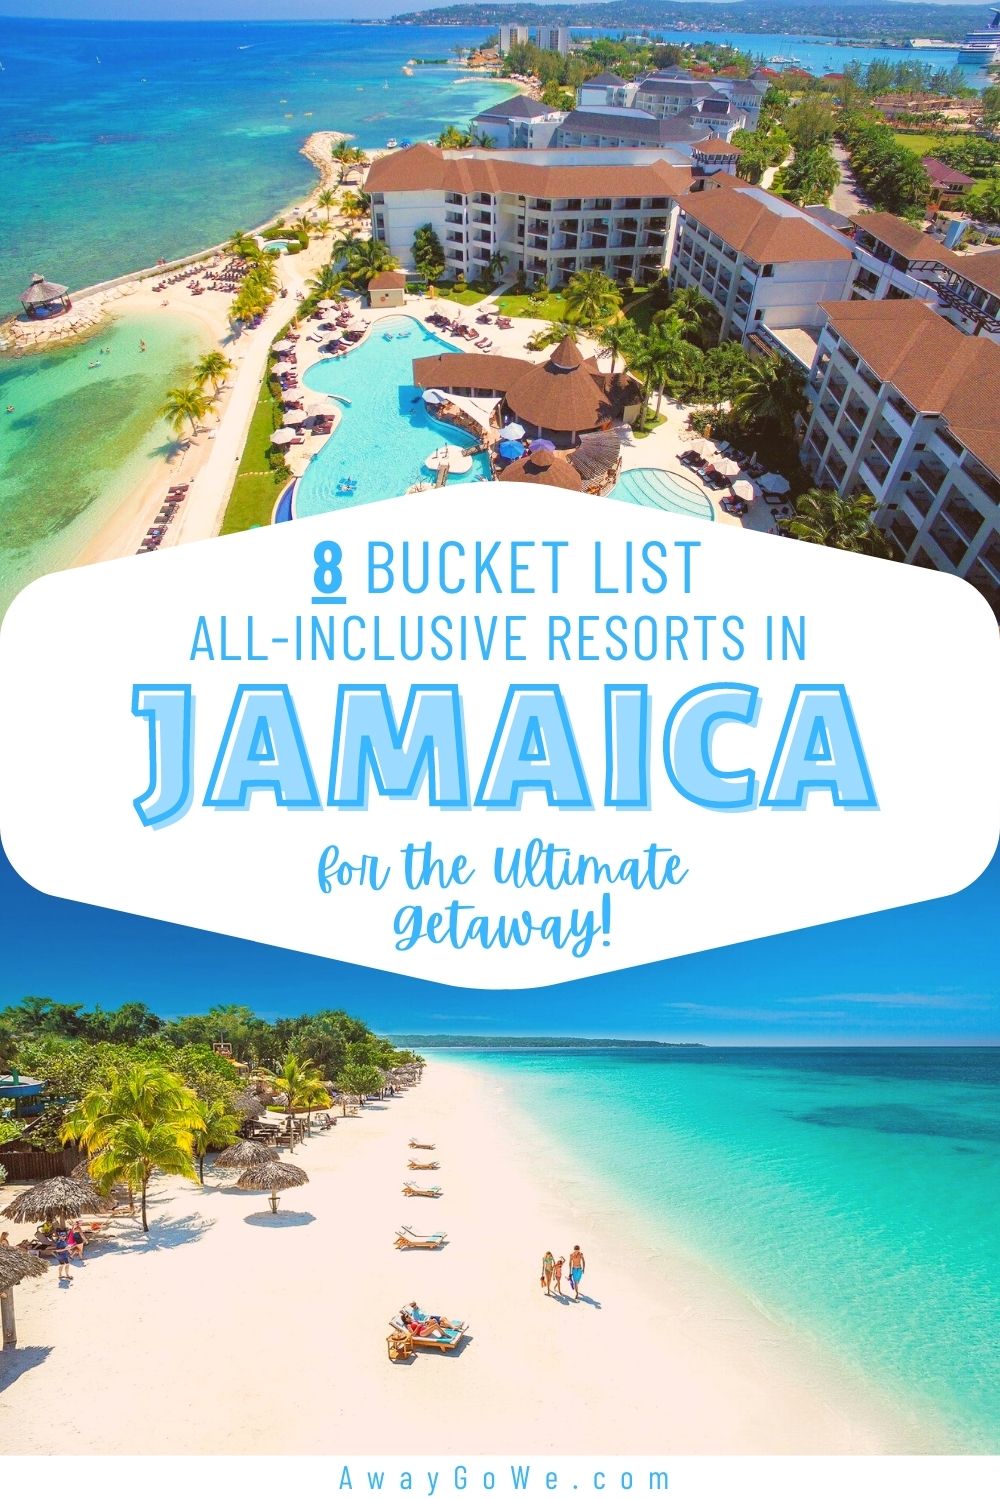 Jamaica all-inclusive resorts